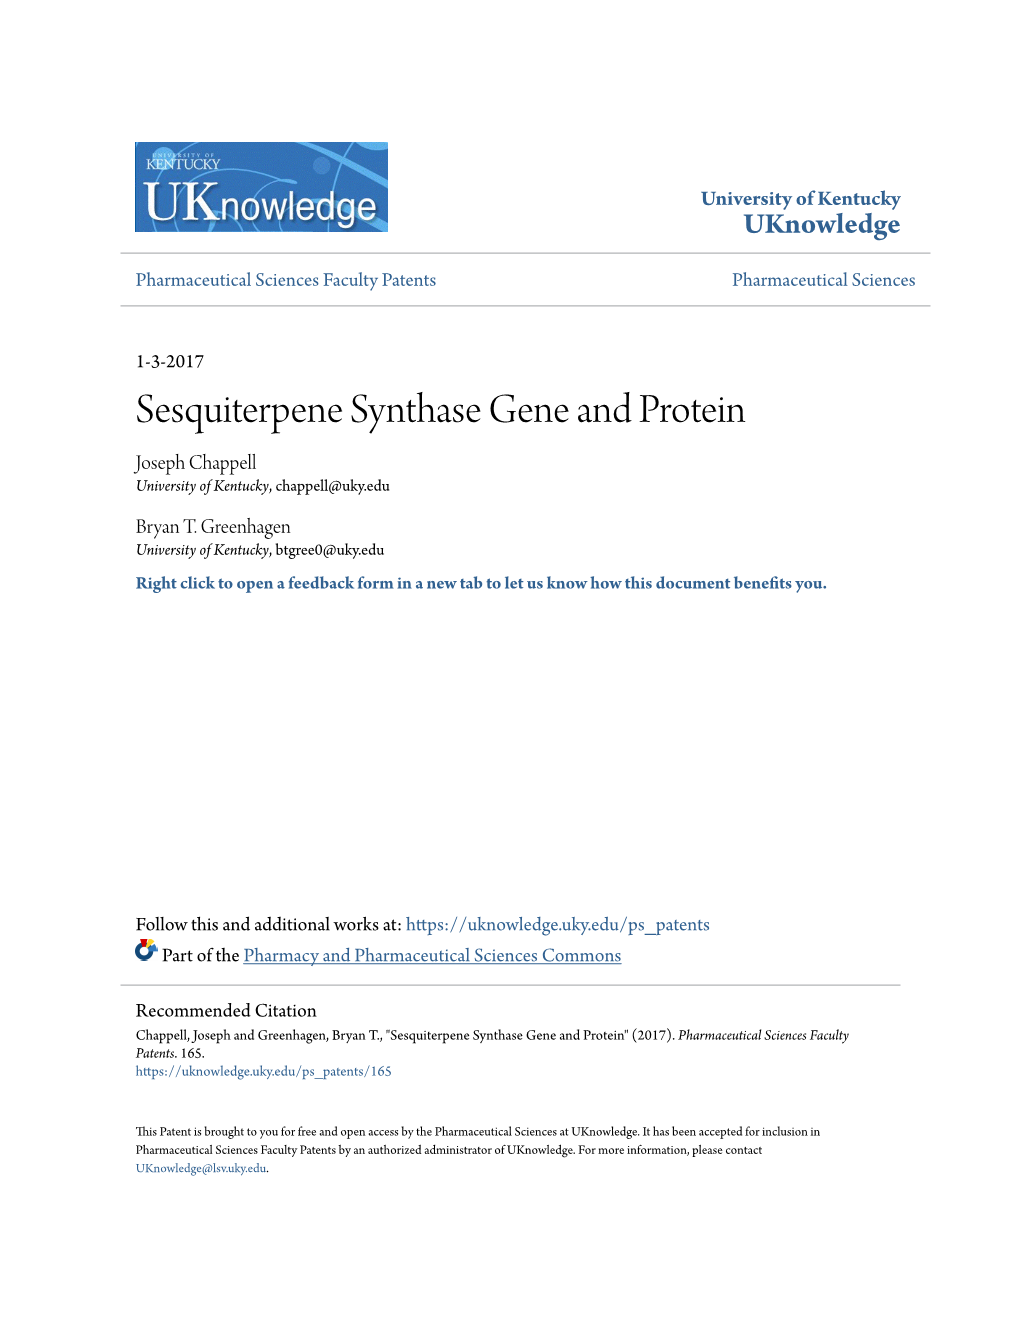 Sesquiterpene Synthase Gene and Protein Joseph Chappell University of Kentucky, Chappell@Uky.Edu